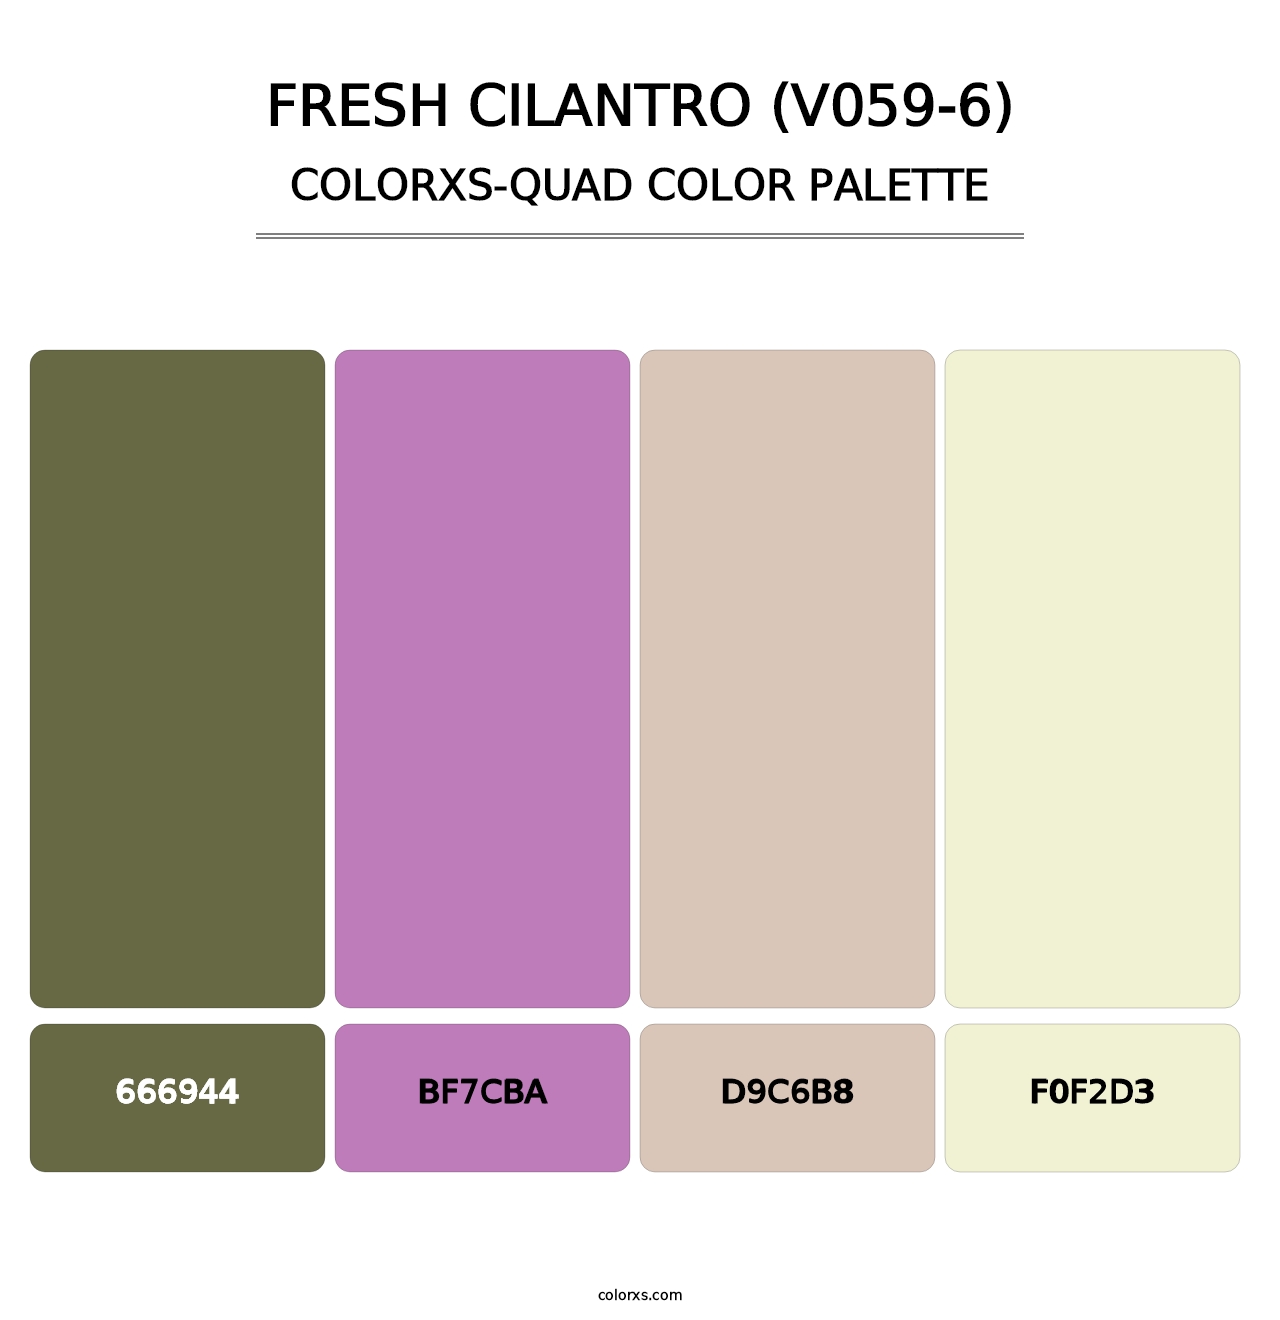 Fresh Cilantro (V059-6) - Colorxs Quad Palette